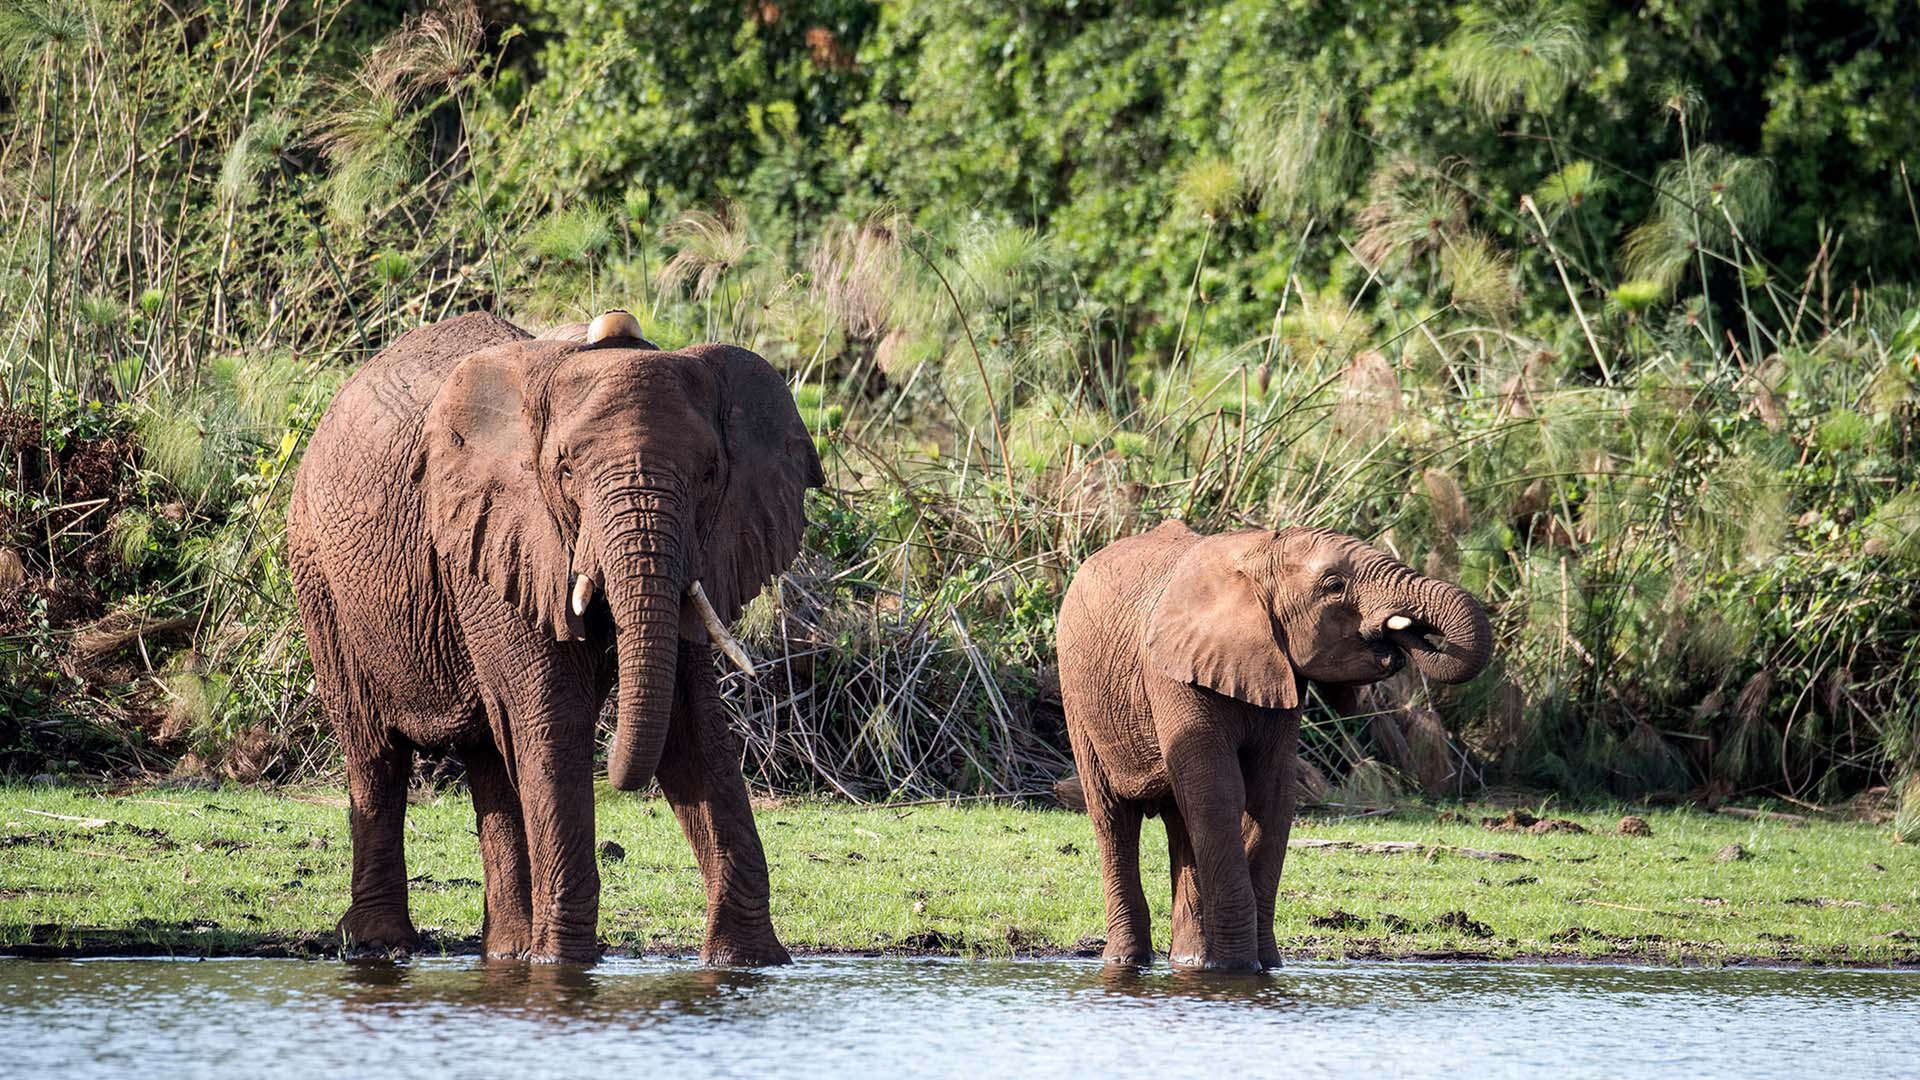 Wildlife holidays with elephants at Akagera National Park